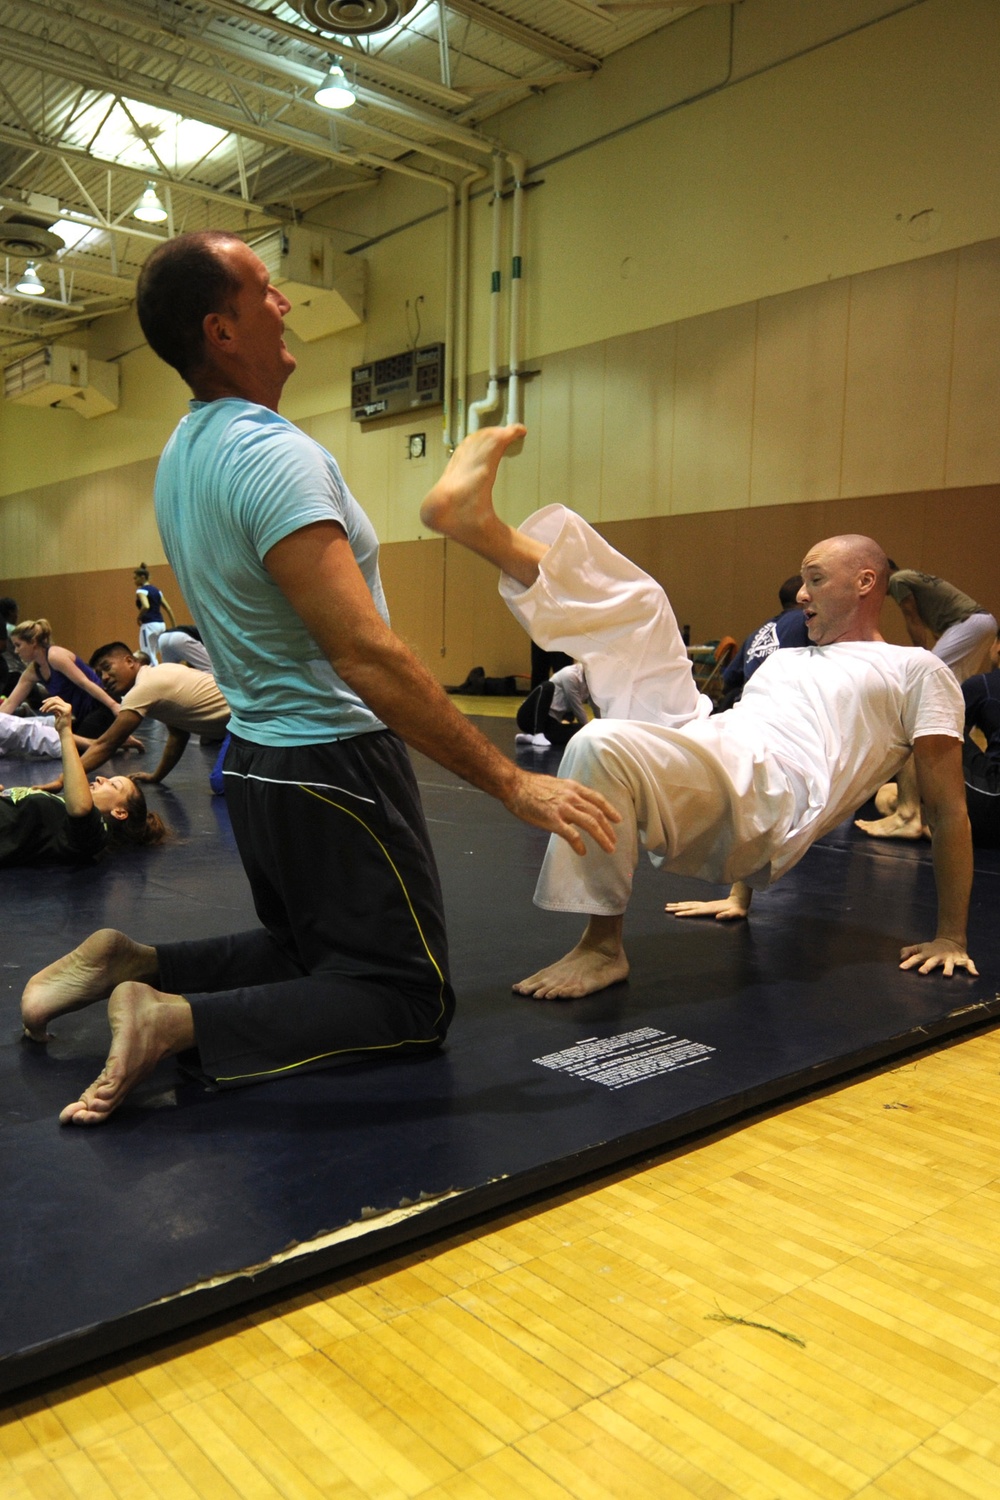 Women Empowered seminar instills jiu-jitsu, self-defense strategies